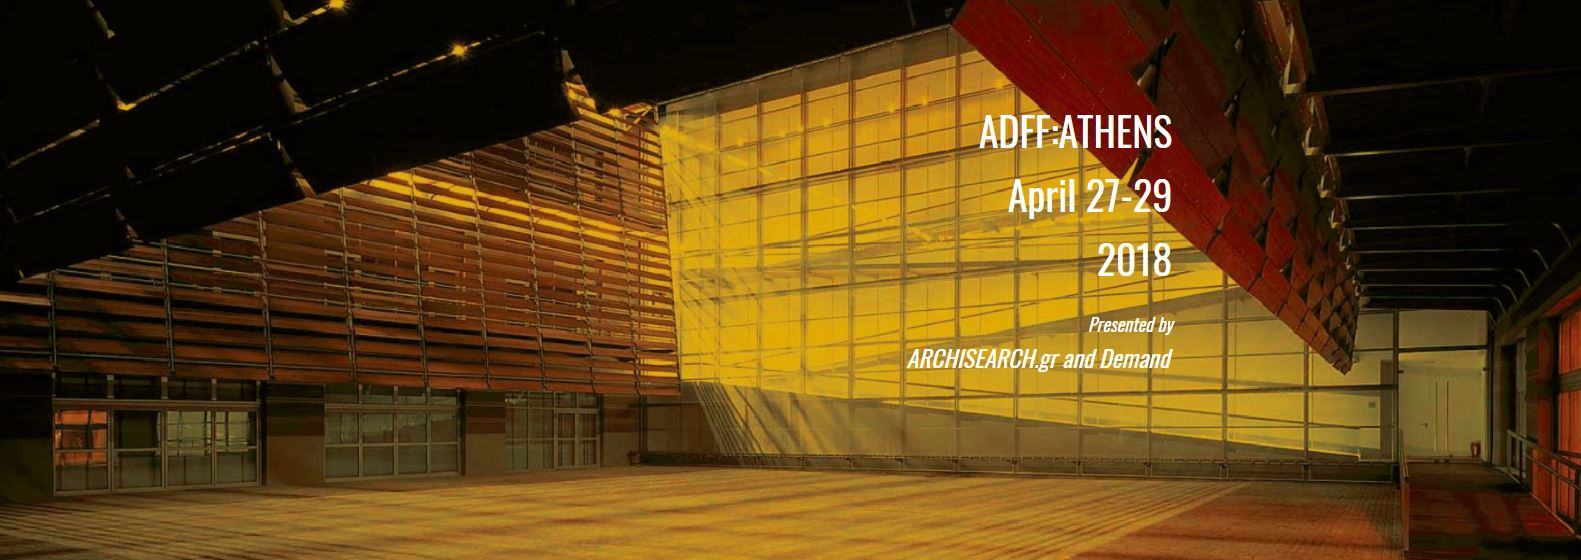 Archisearch Q&A with ADFF - Architecture & Design Film Festival founder Kyle Bergman